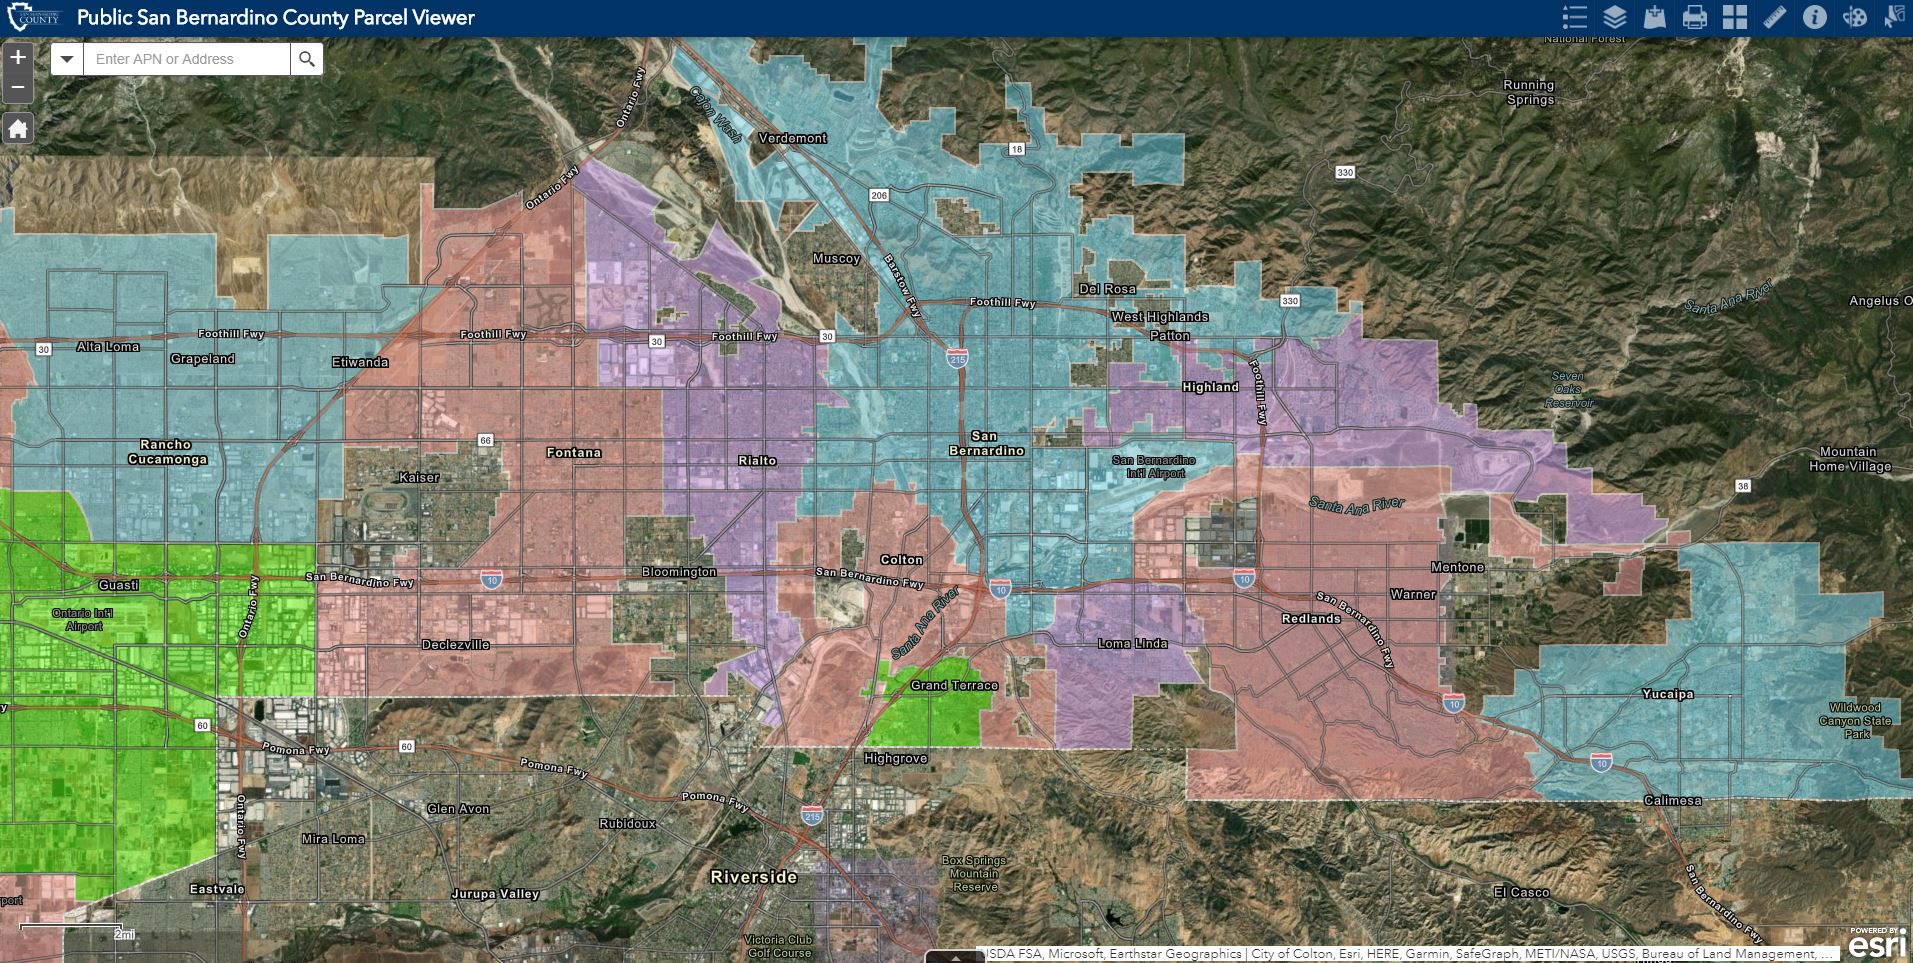 Assessor Property Information – San Bernardino County Assessor ...